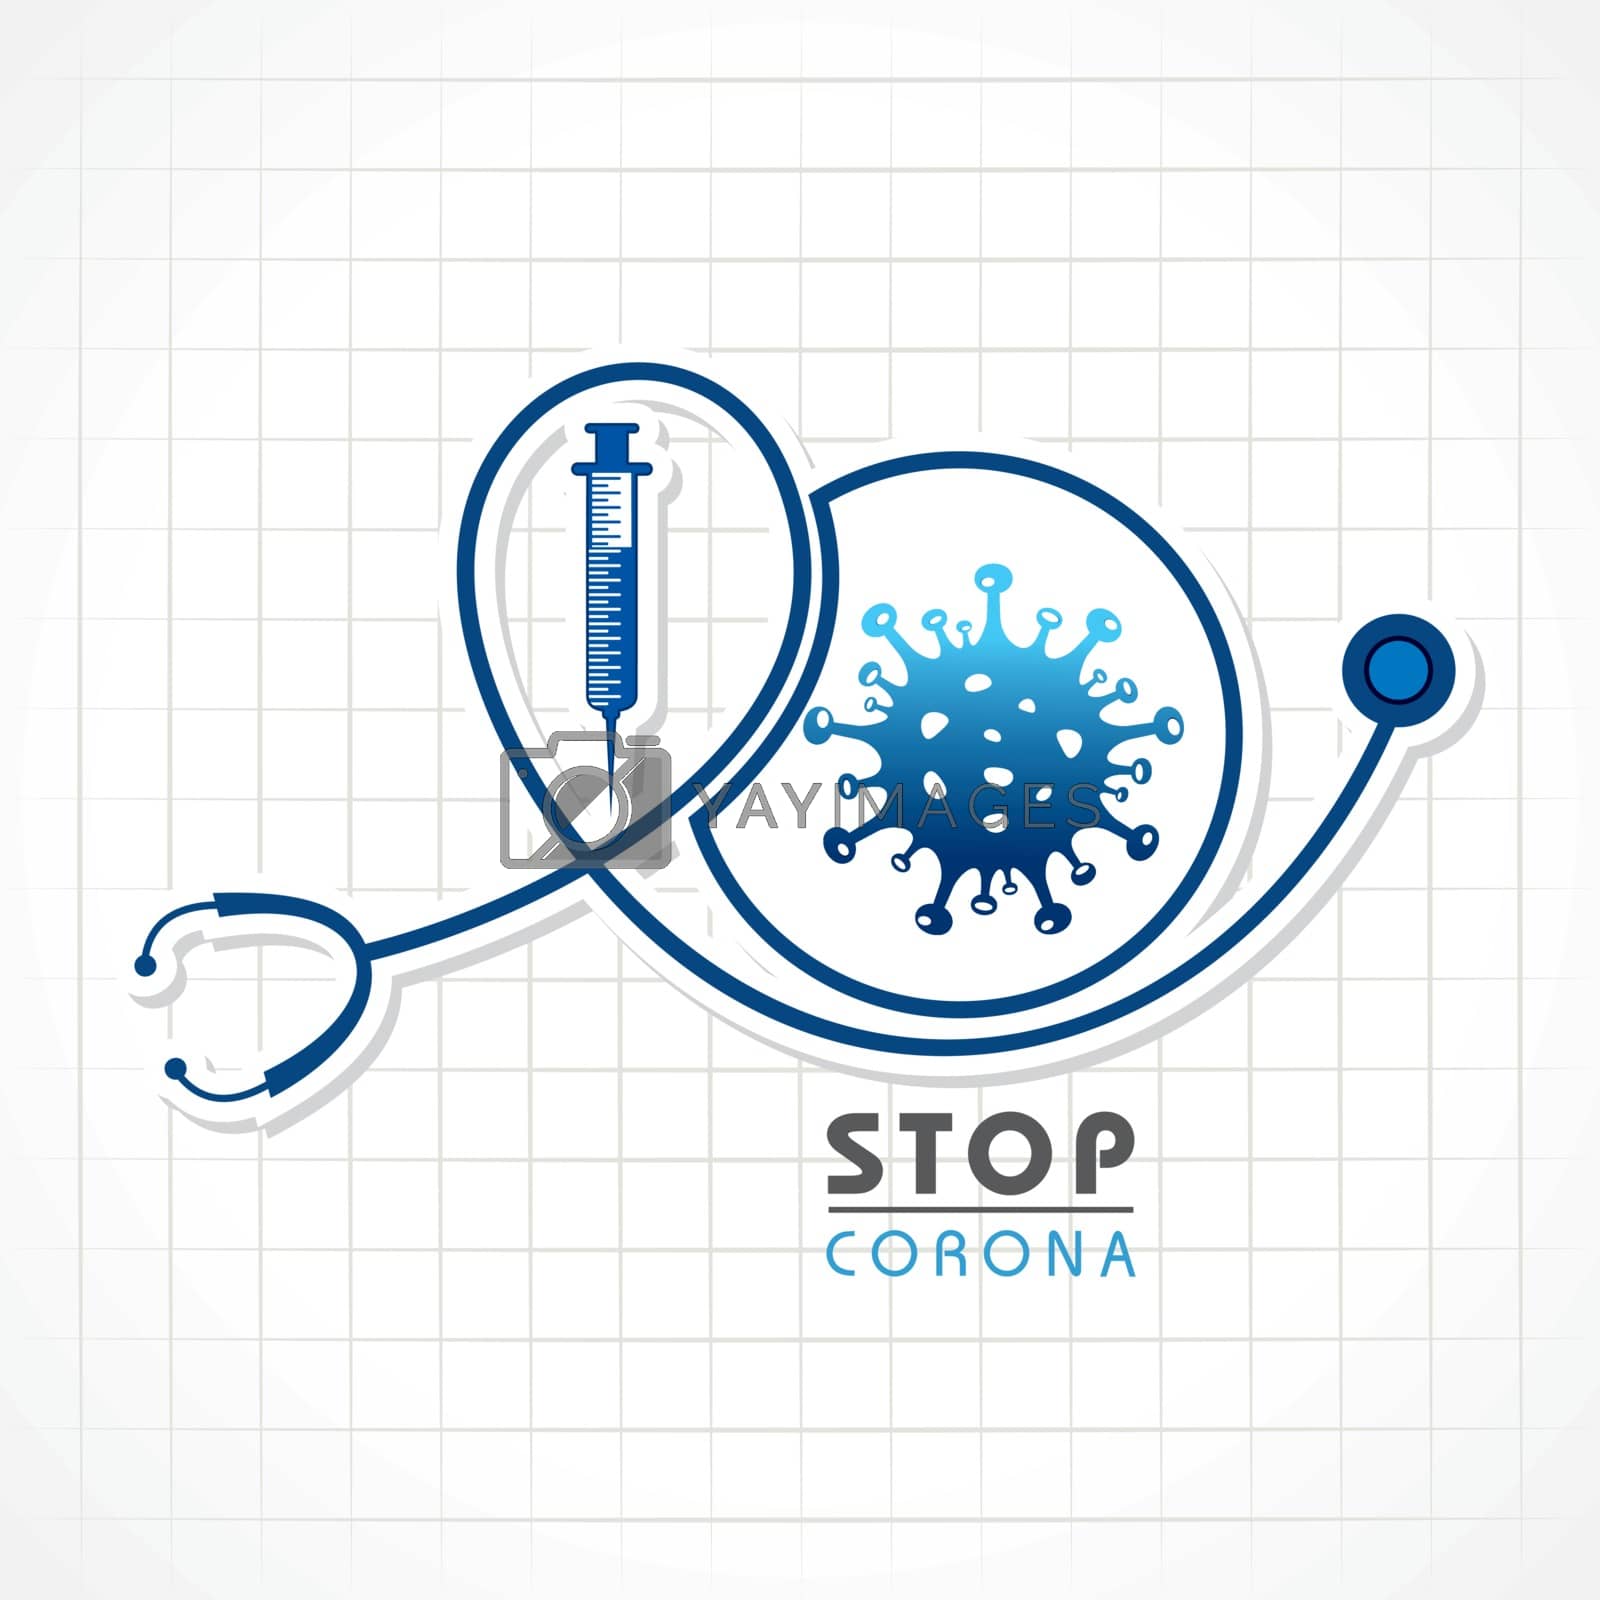 Royalty free image of Corona Virus 2019-20. Wuhan virus disease, by graphicsdunia4you